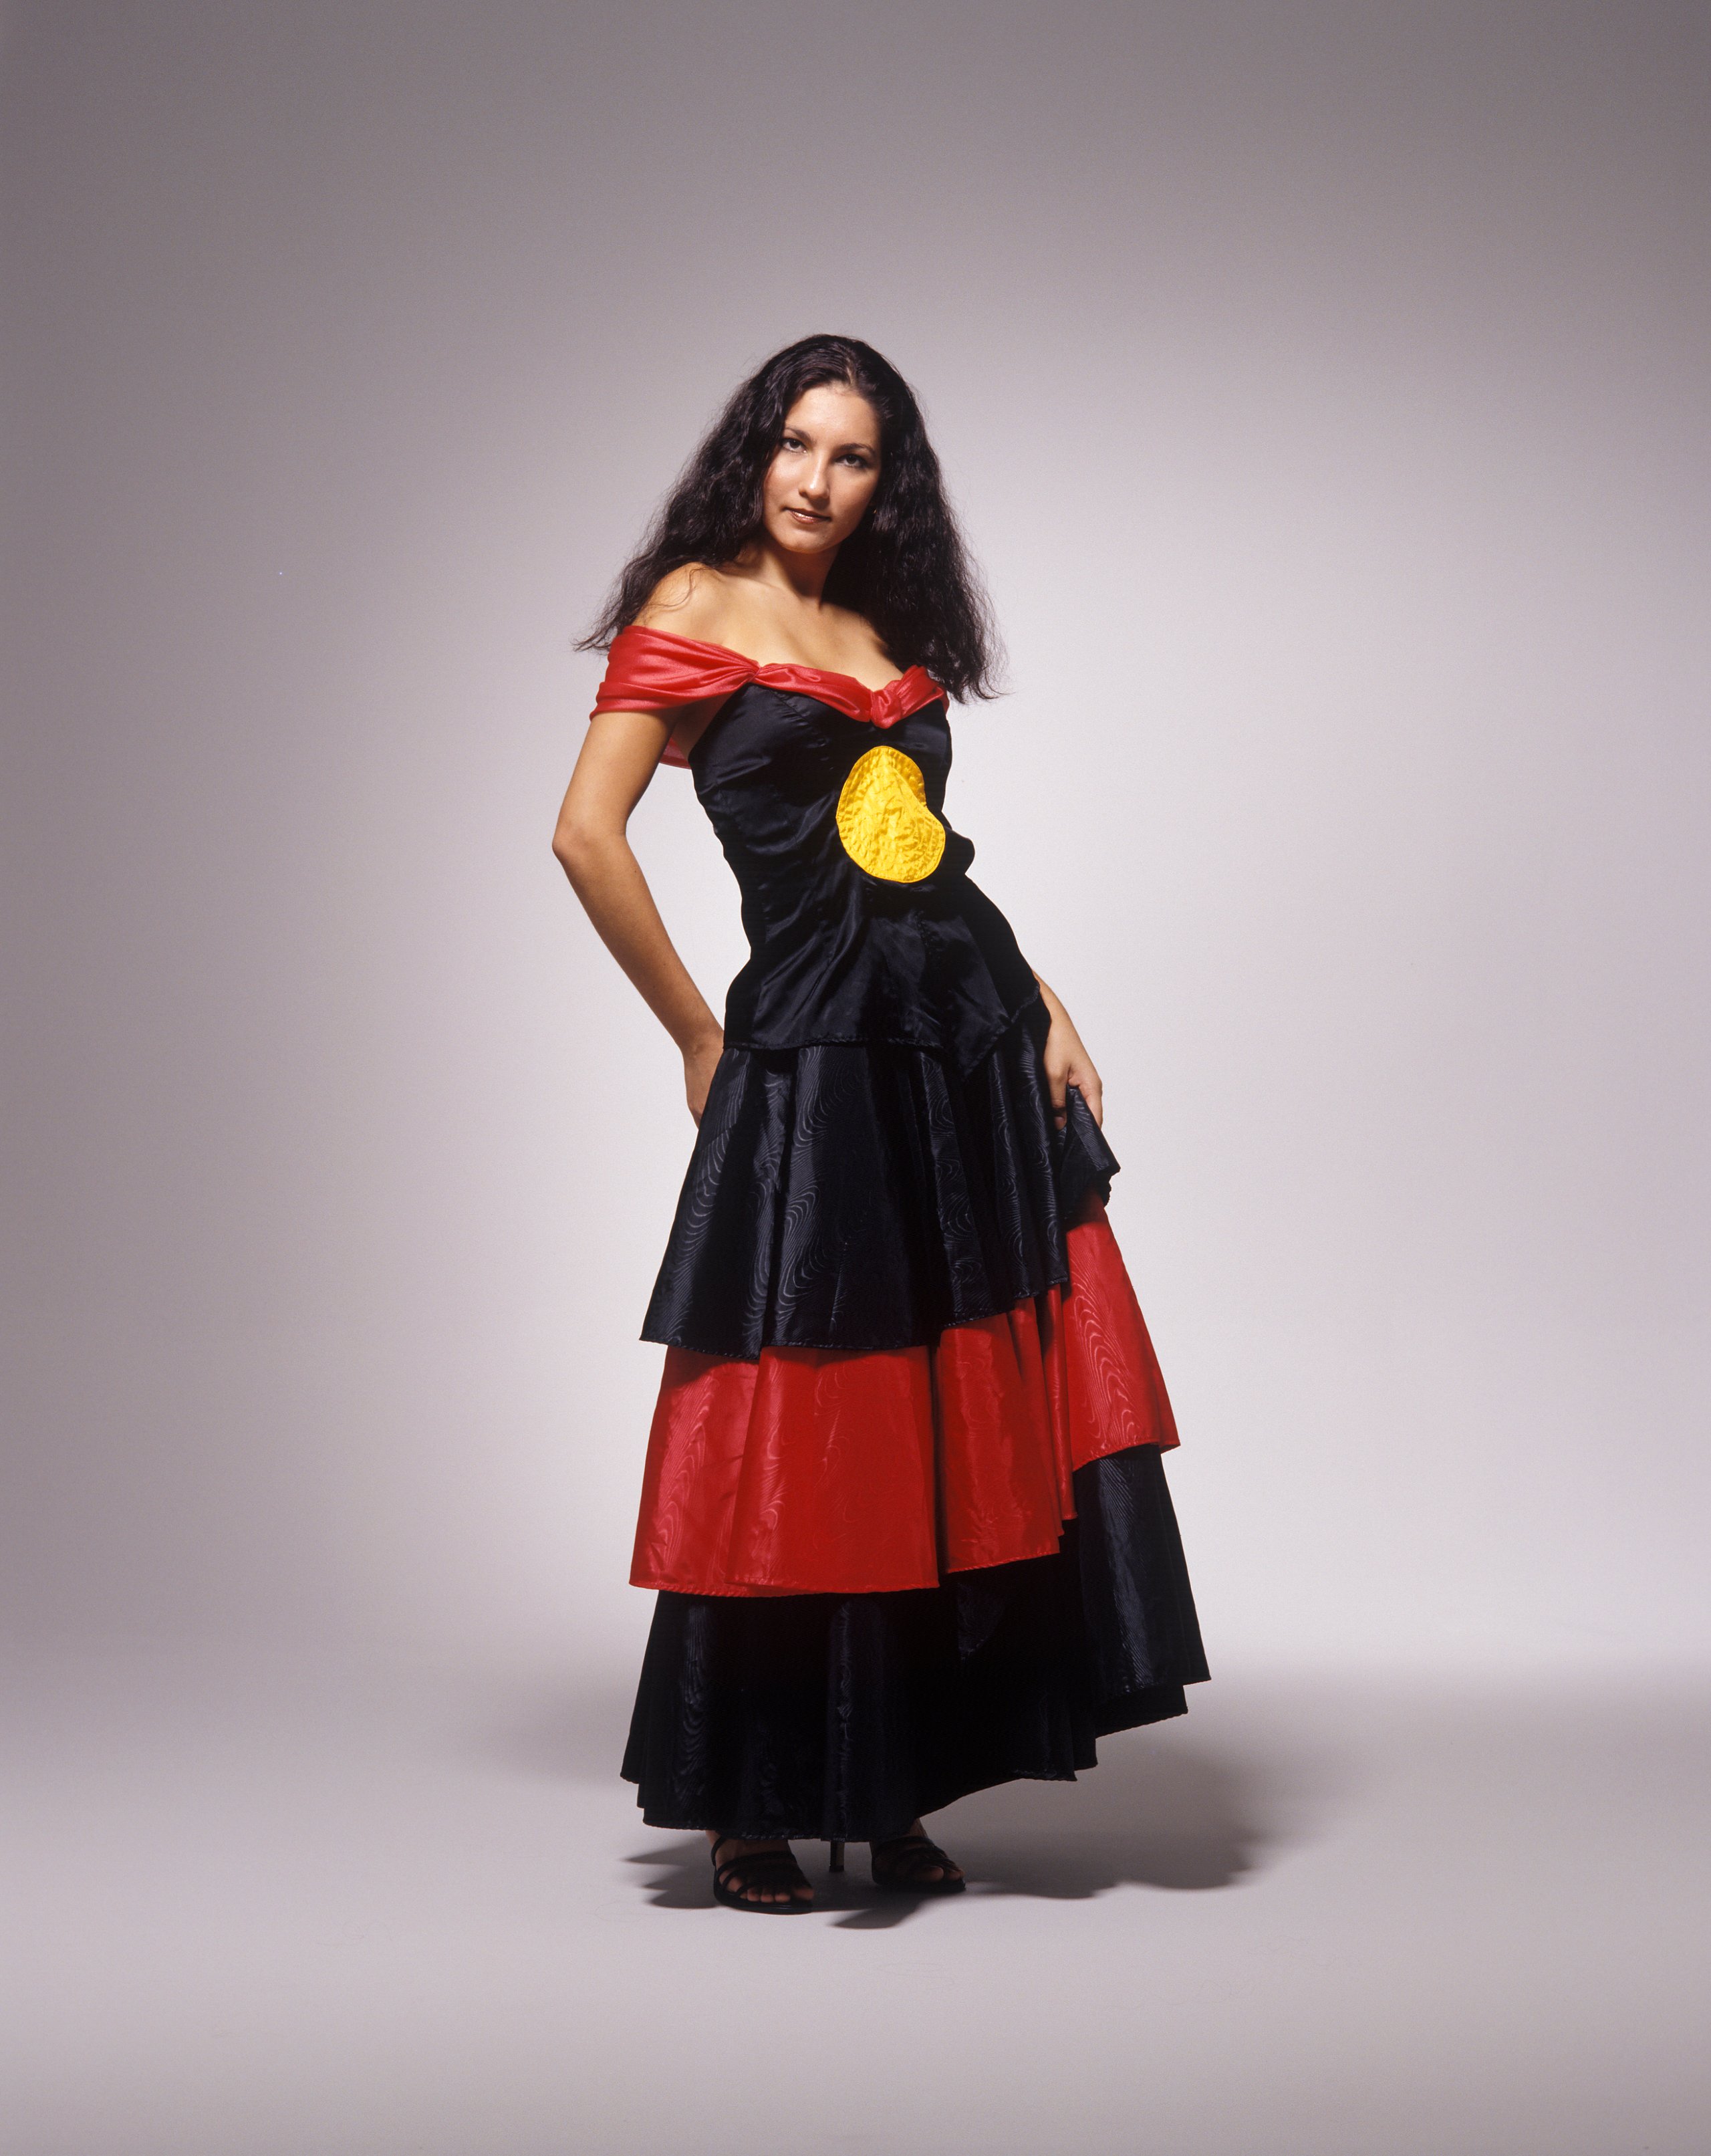 'Aboriginal Wedding Dress', designed by Robyn Caughlan